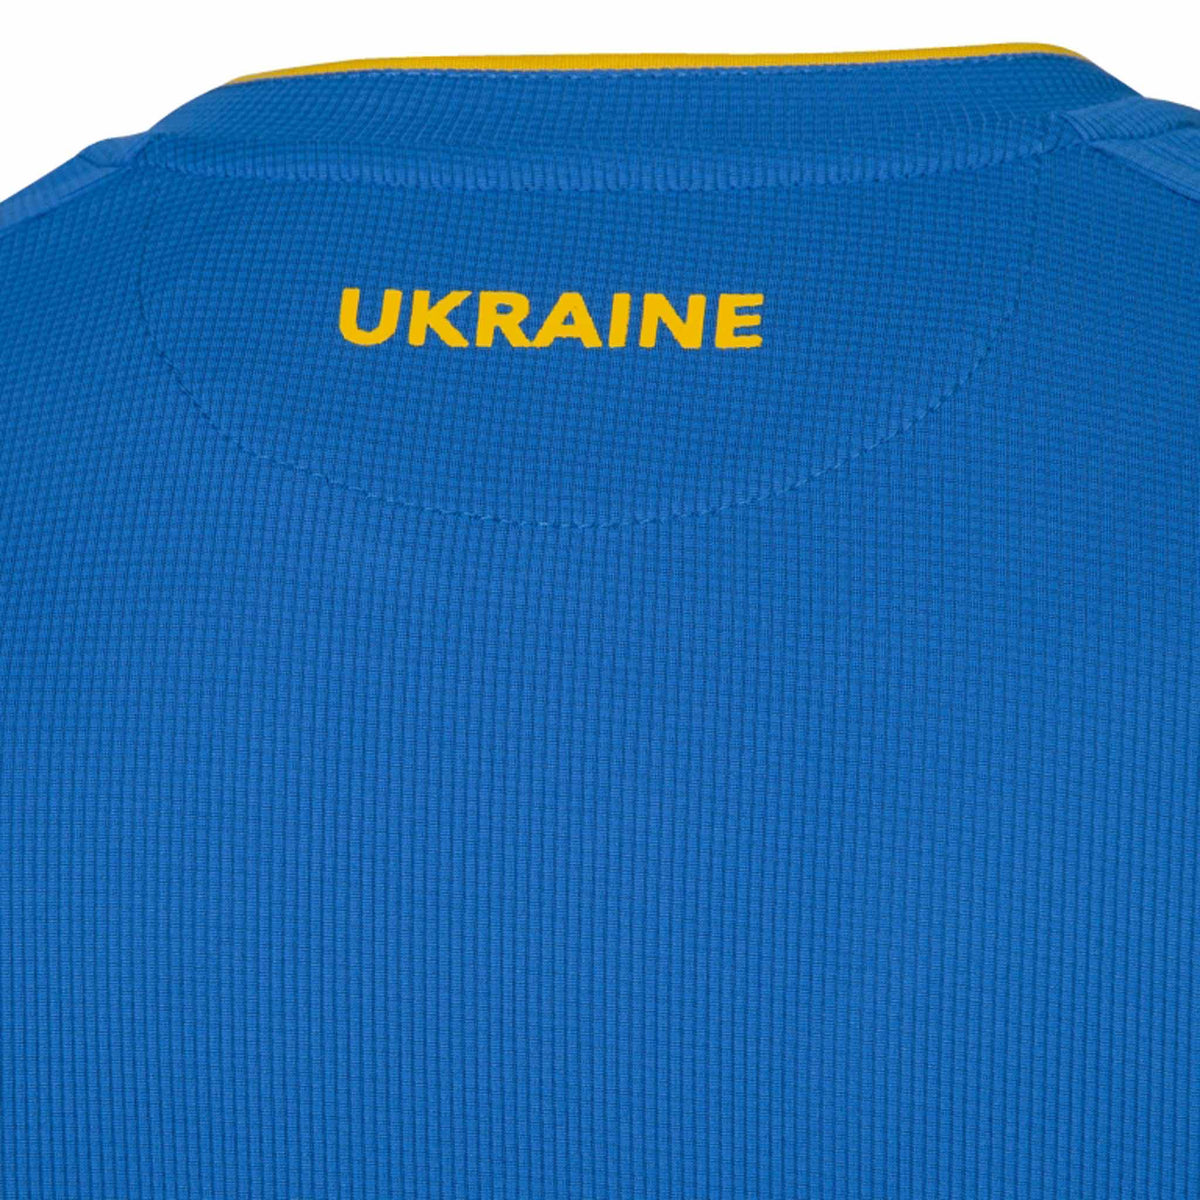 Joma Ukrainian Football Federation 2021/22 maillot de soccer 2e chandail nuque